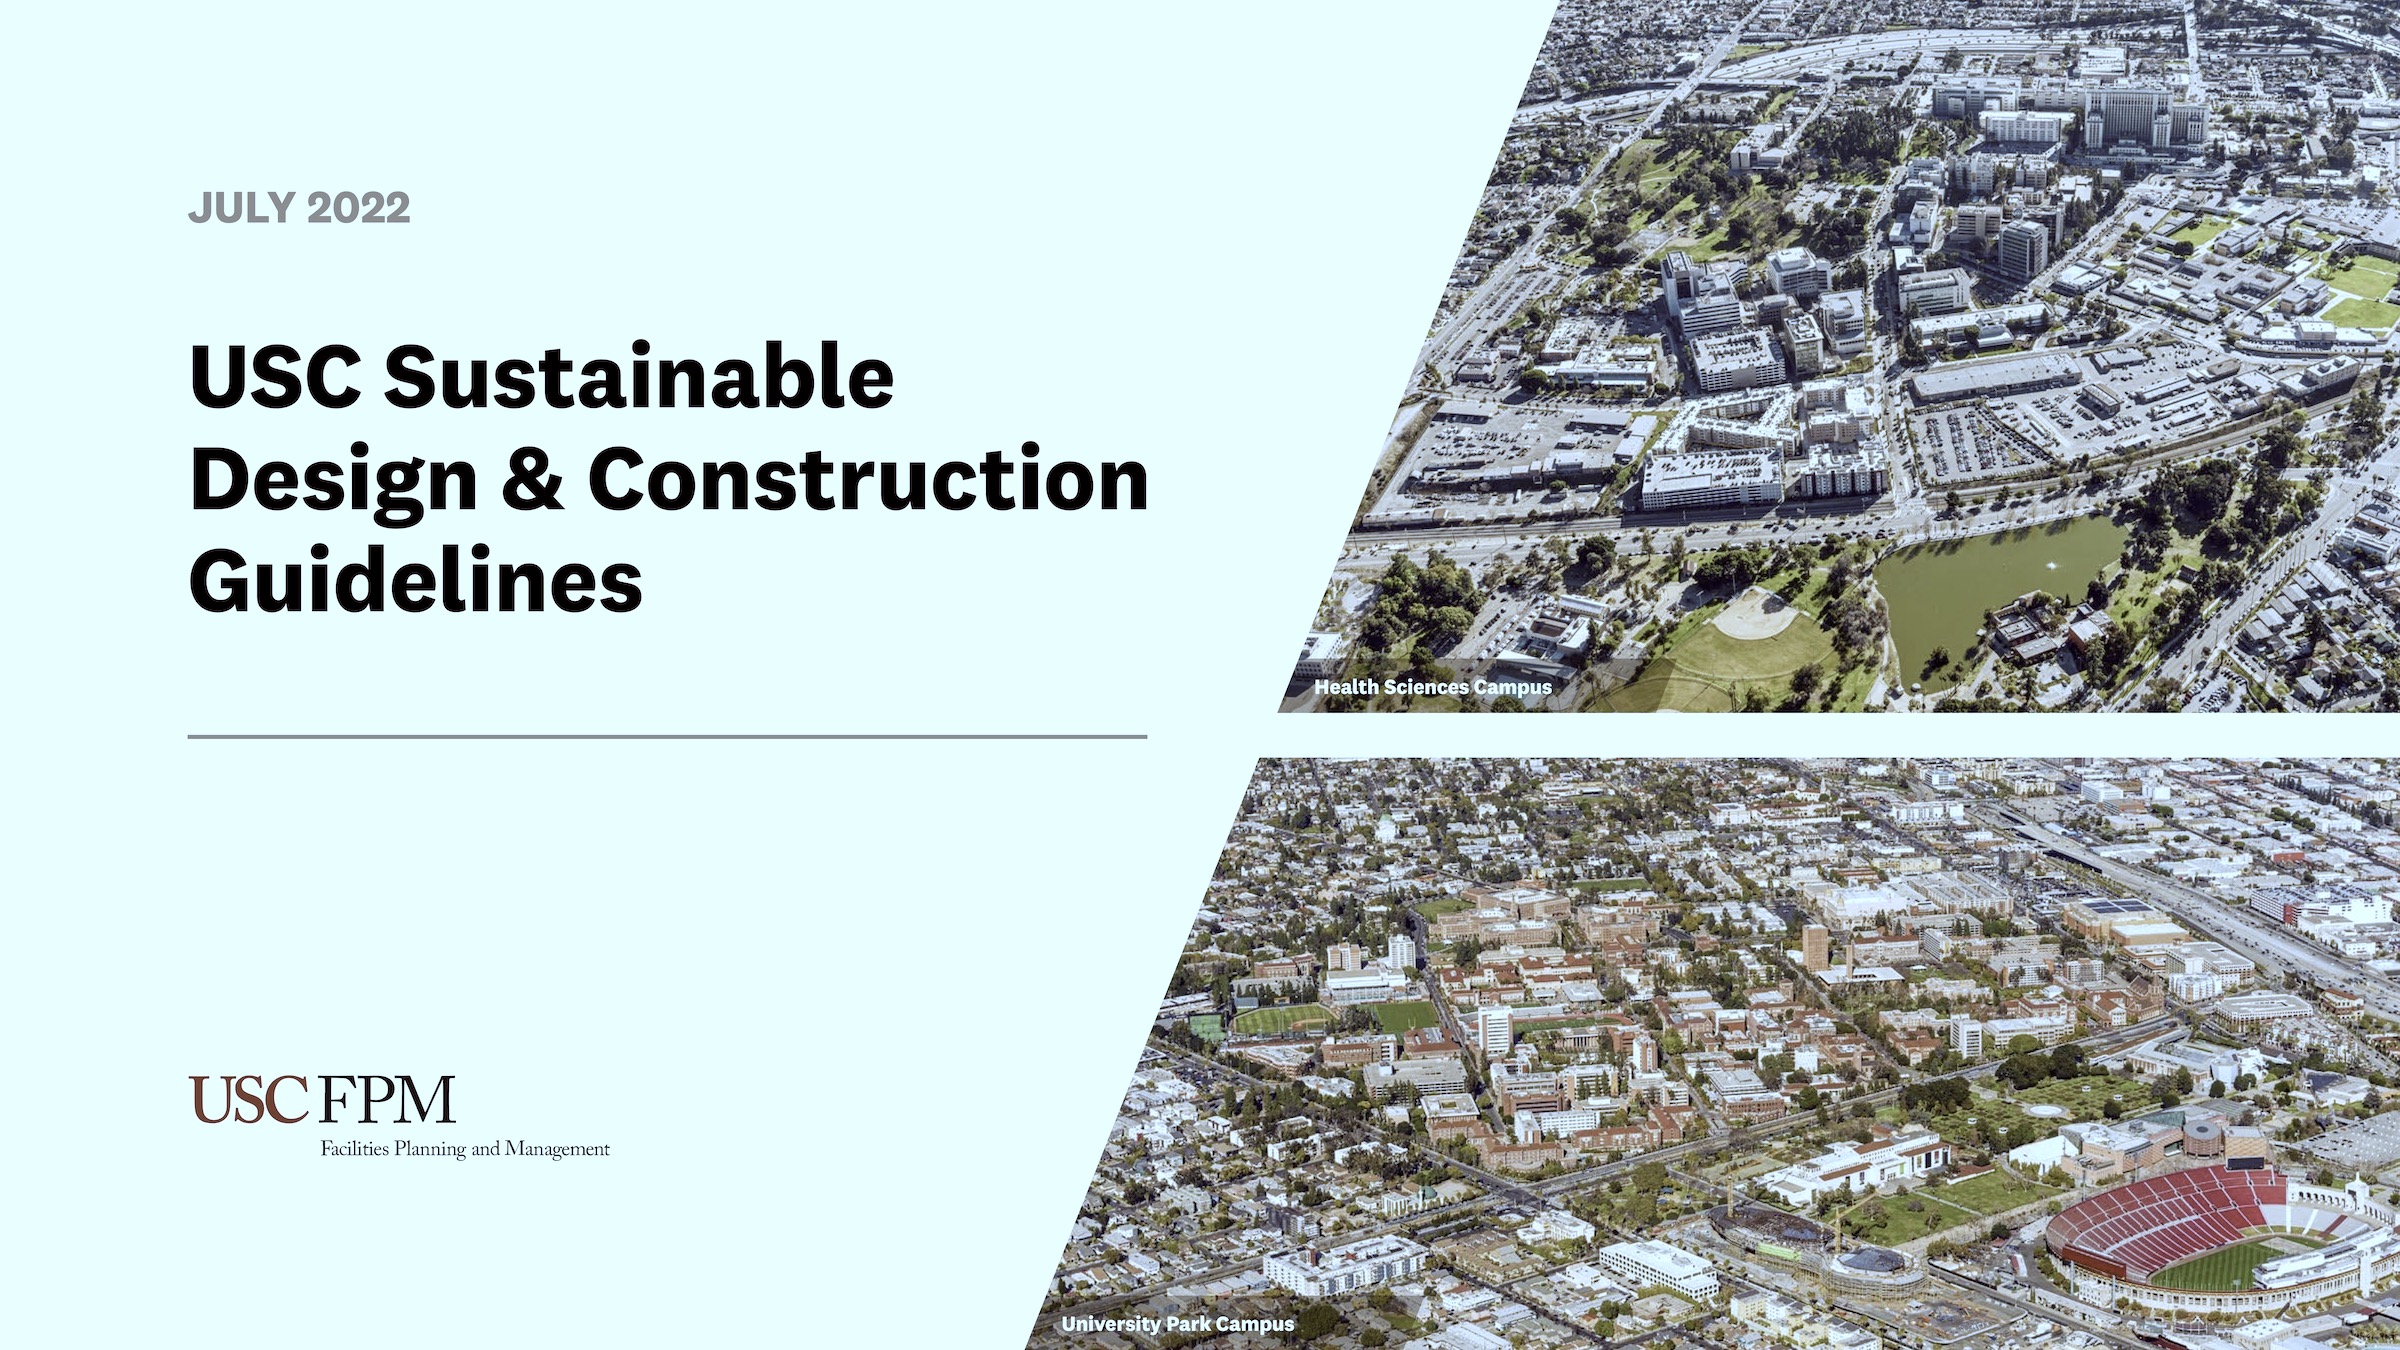 USC Sustainable Design & Construction Guidelines, courtesy USC